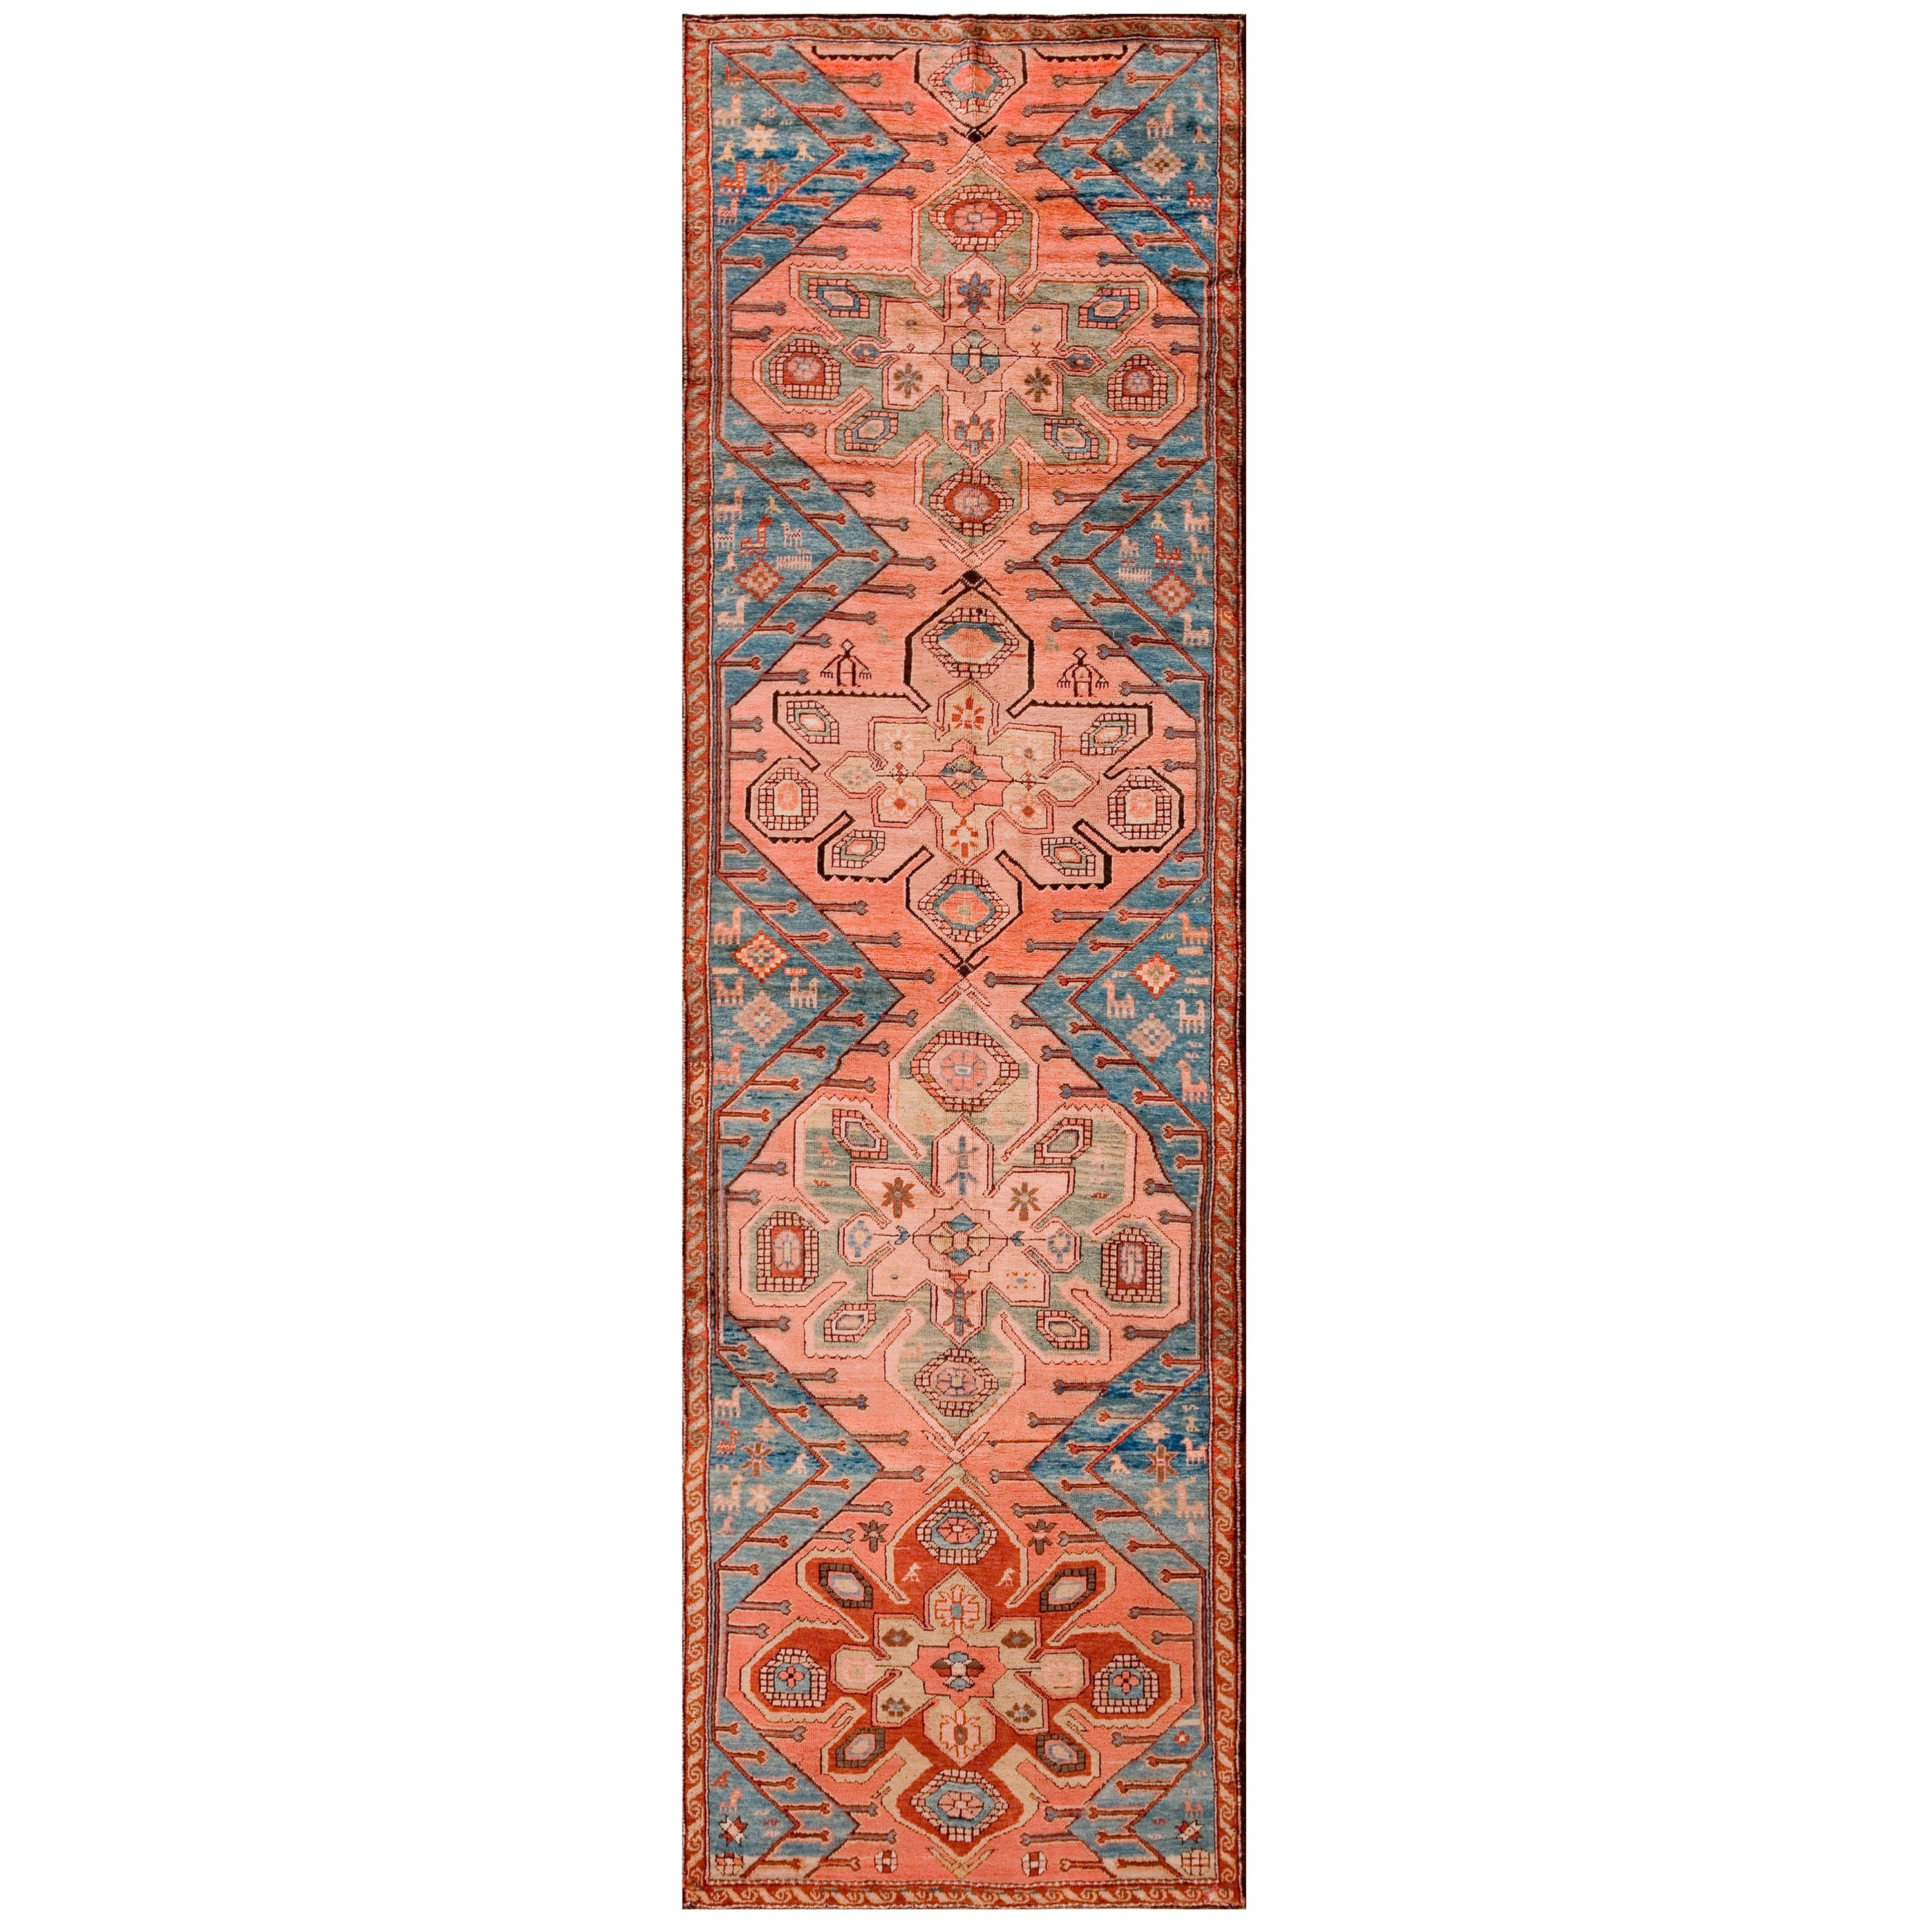 Early 20th Century Caucasian Karabagh Carpet ( 3'9" x 12'3" - 114 x 373 cm ) For Sale